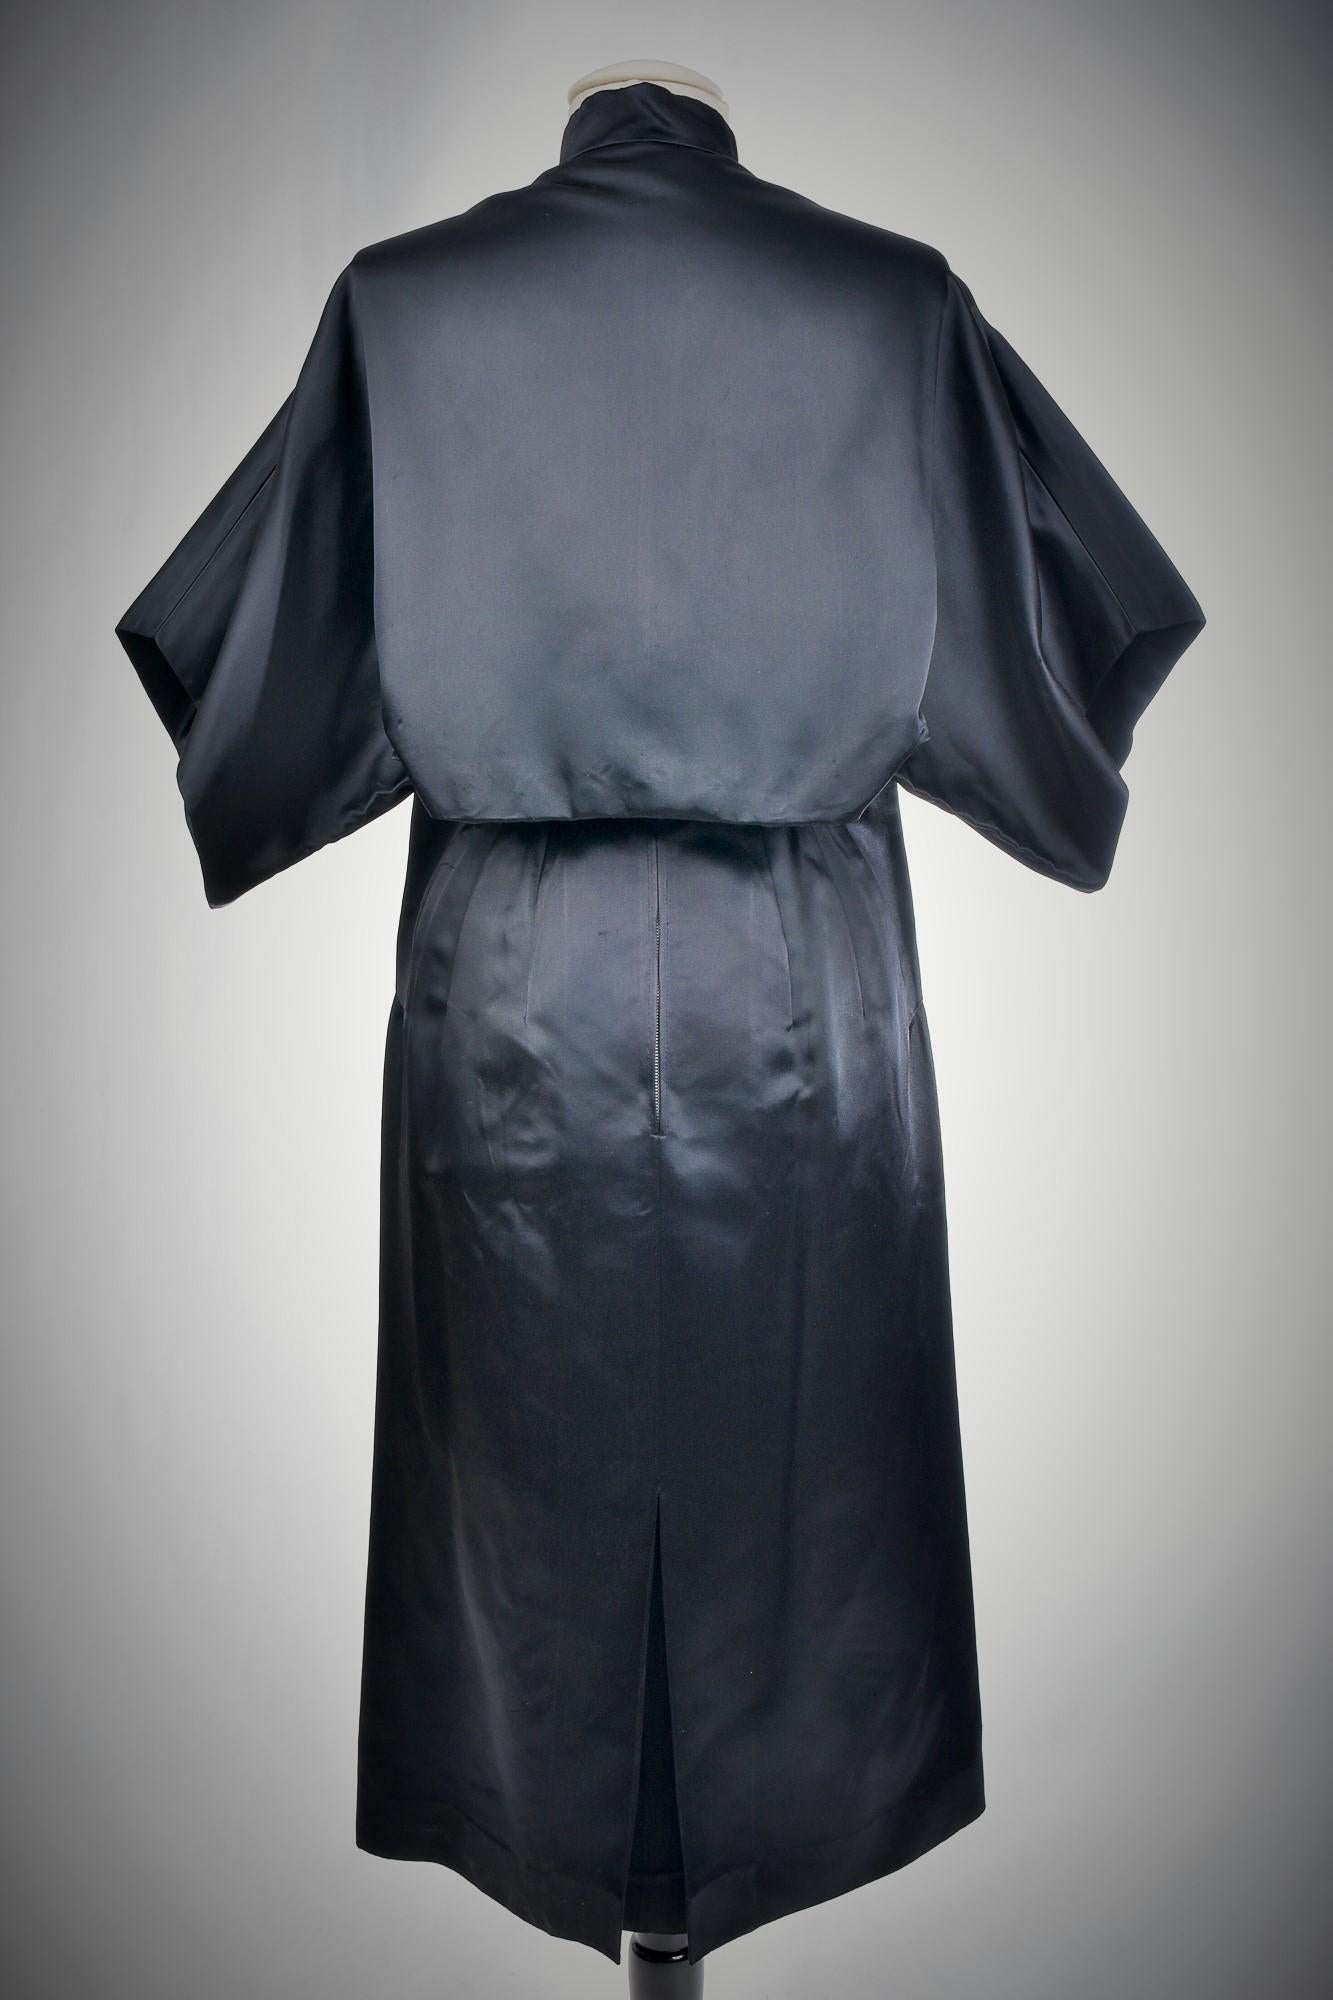 Black Waxed Satin Trapèze Bolero & Skirt by Vatan Couture France Circa 1960 For Sale 12